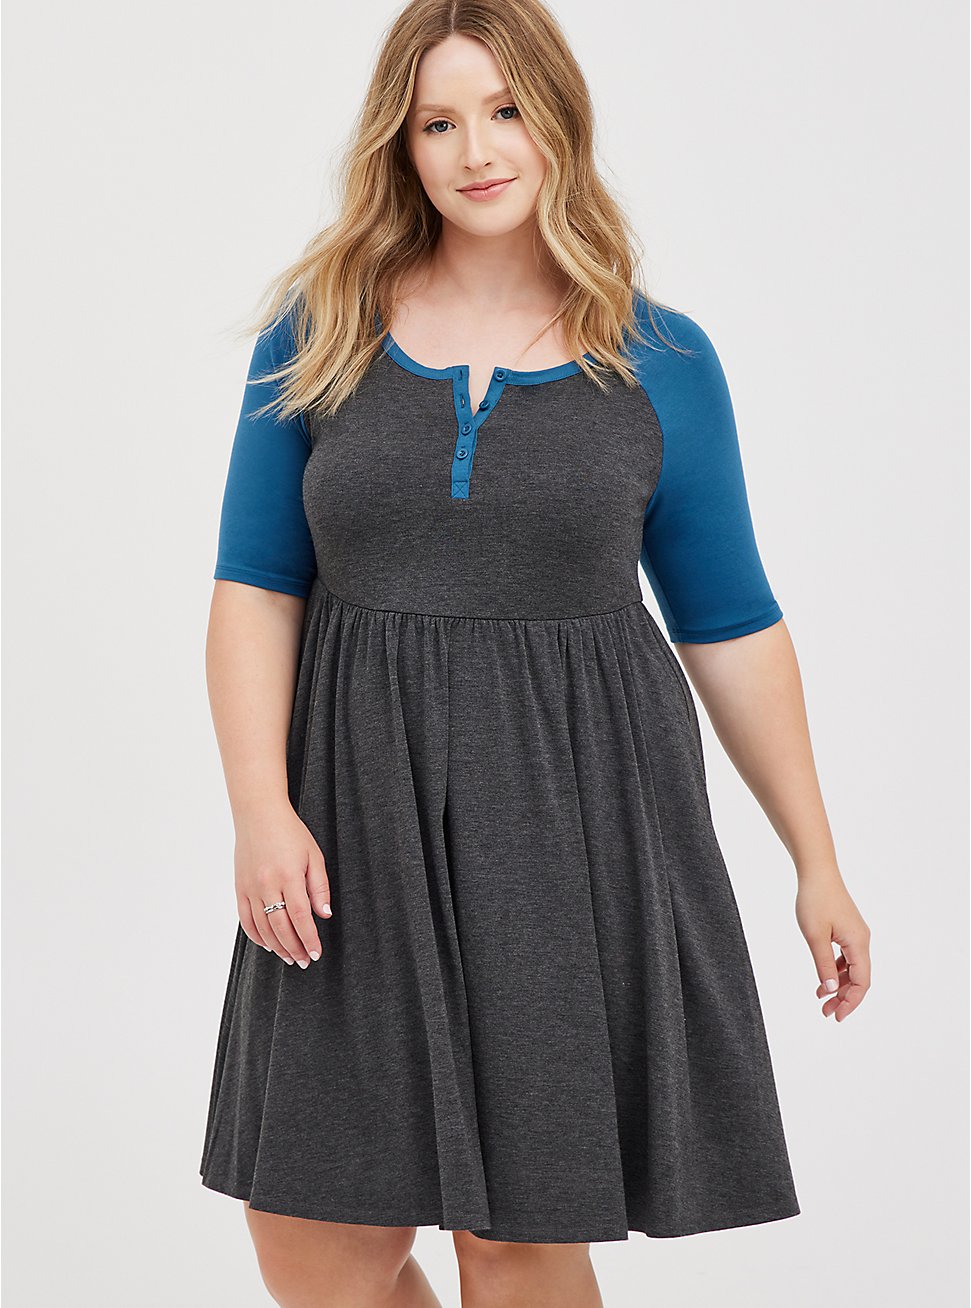 Plus Size Skater Dress - Super Soft Heather Grey & Blue, HEATHER  CHARCOAL, hi-res